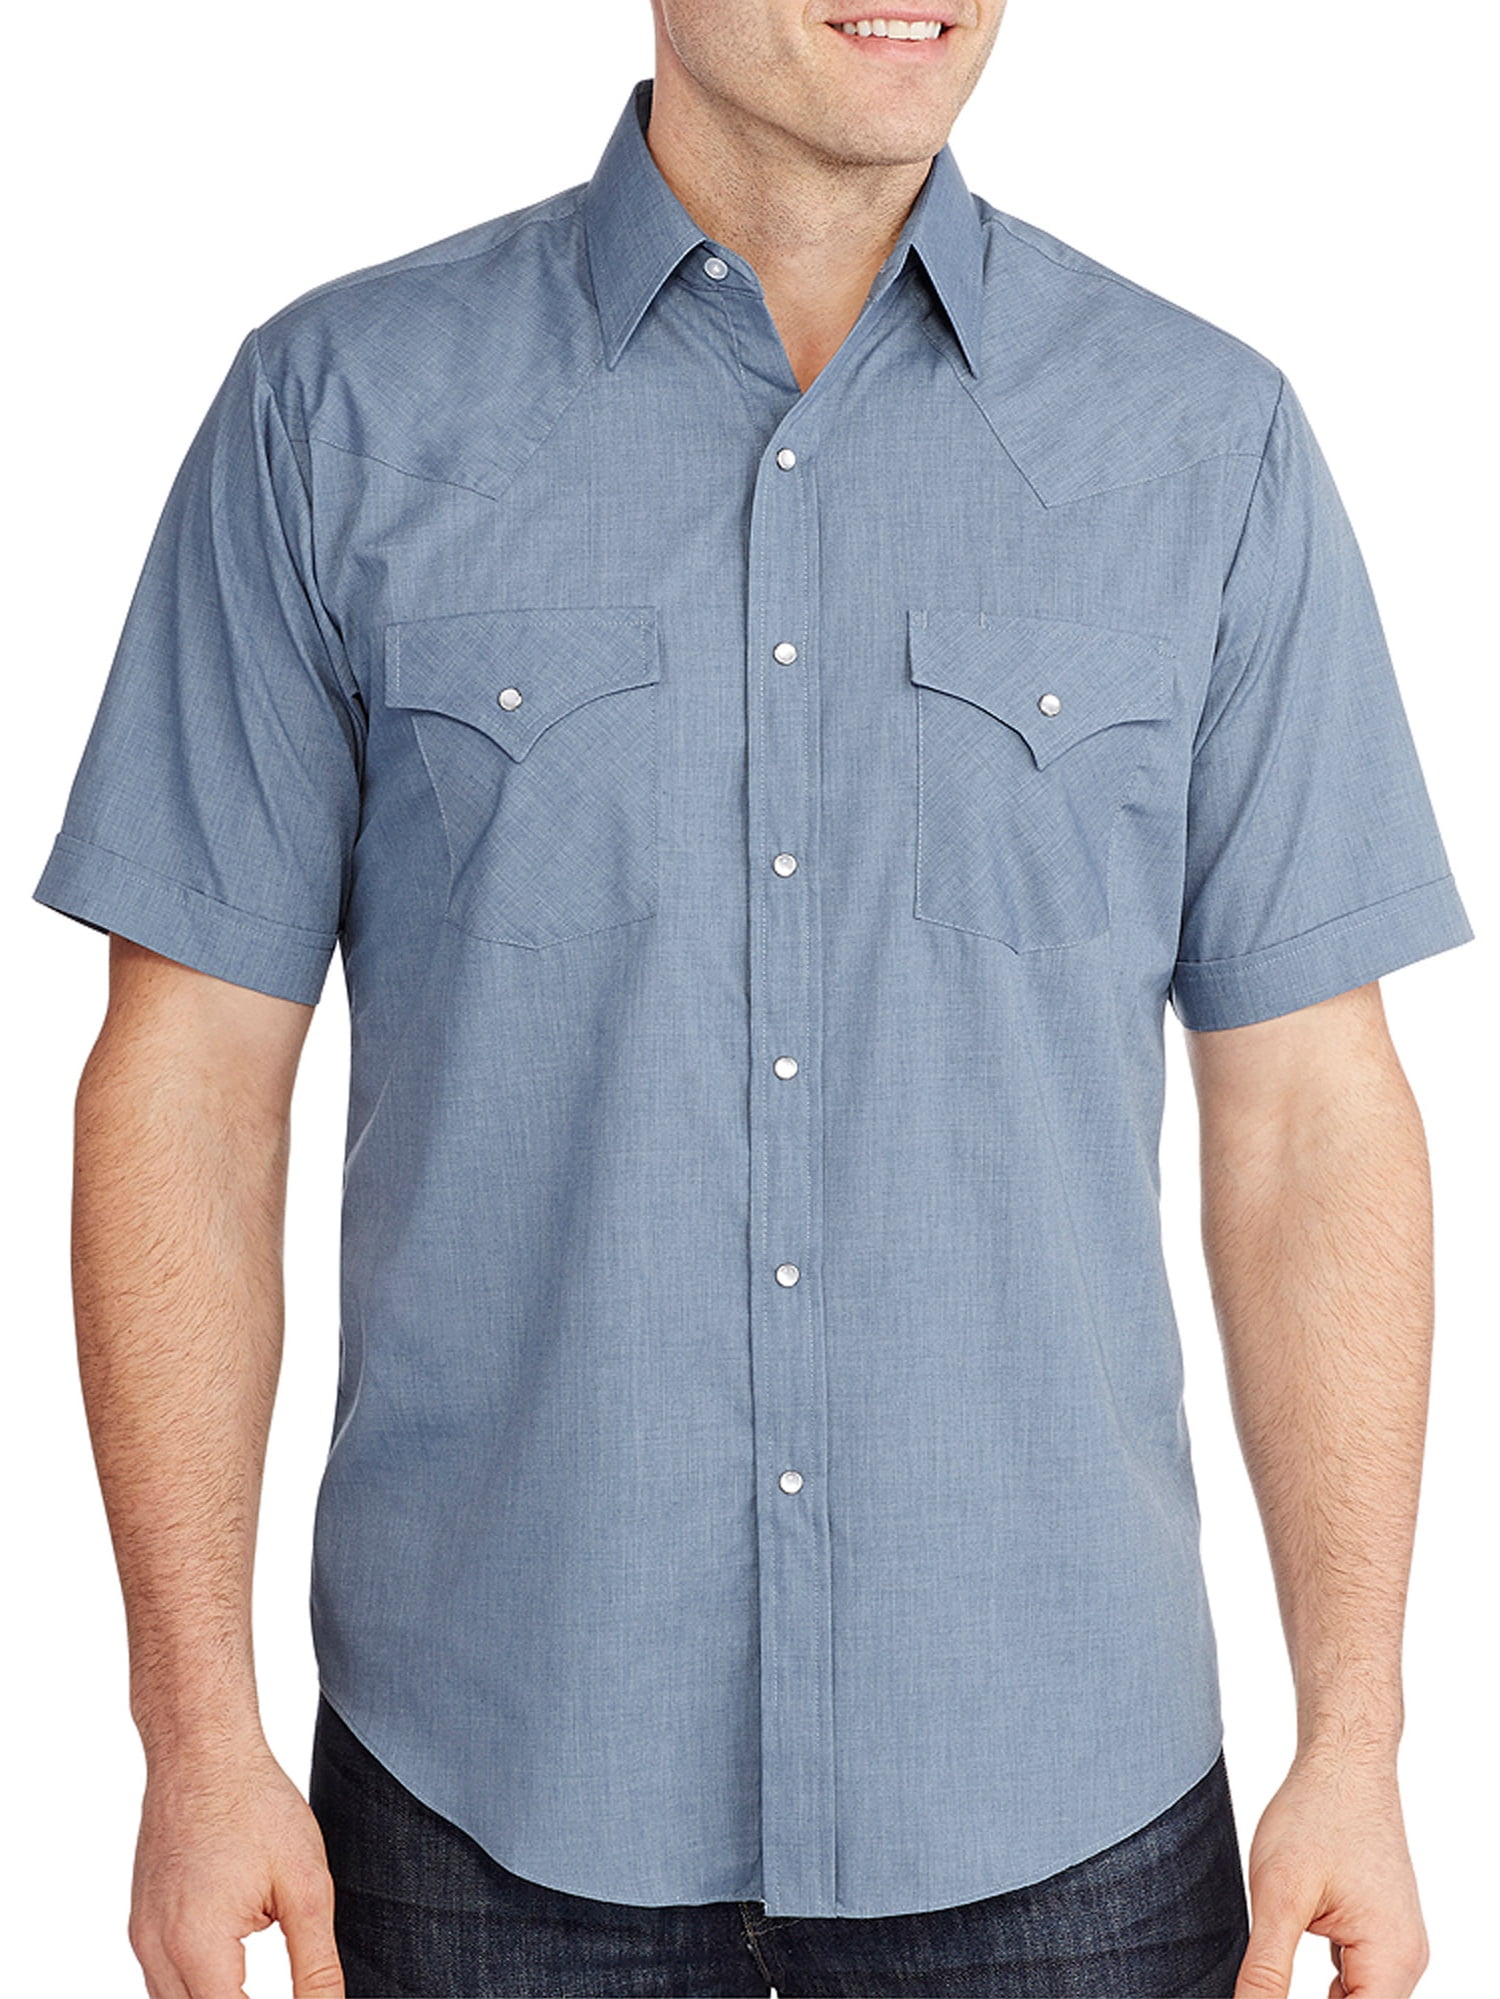 Men's Western Shirt Snap Pockets - Walmart.com